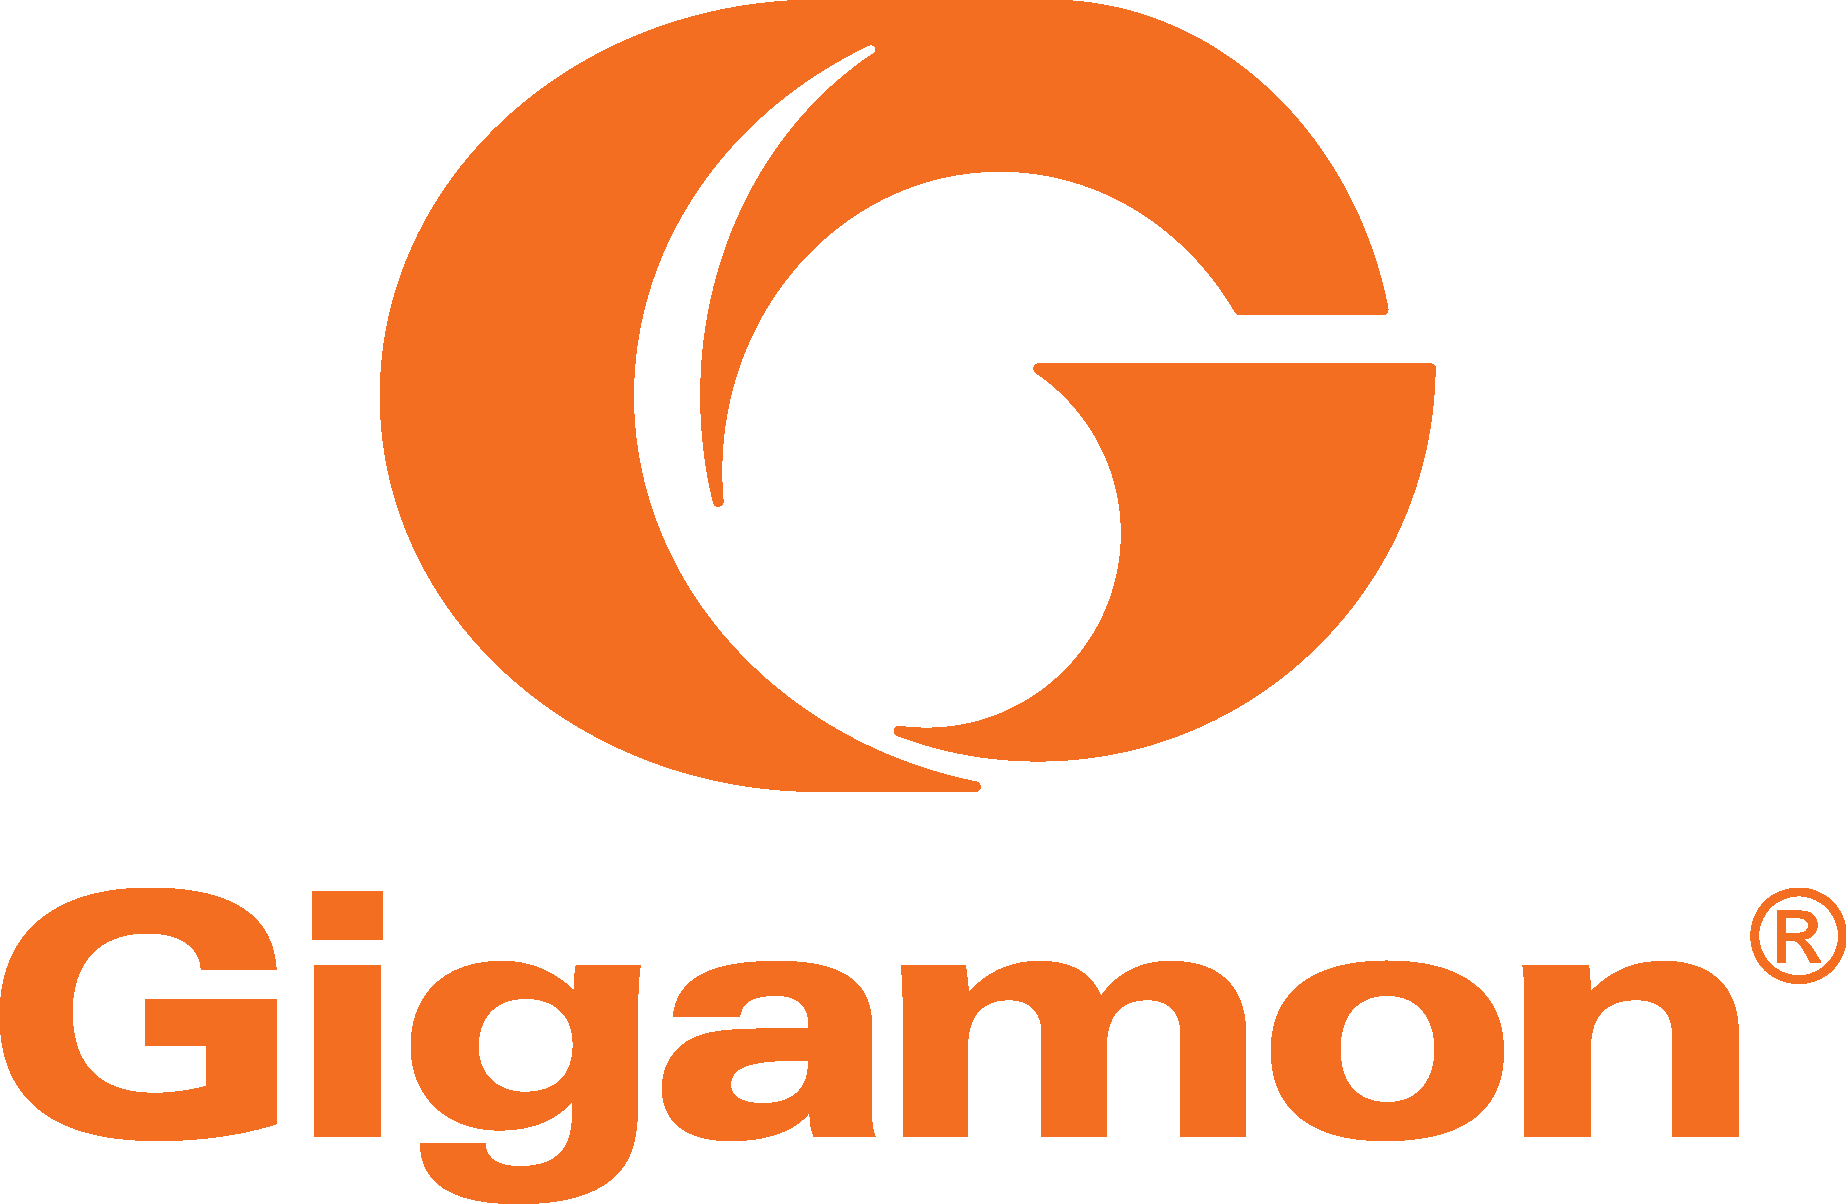 gigamon logo - 2018 Cyberthreat Defense Report